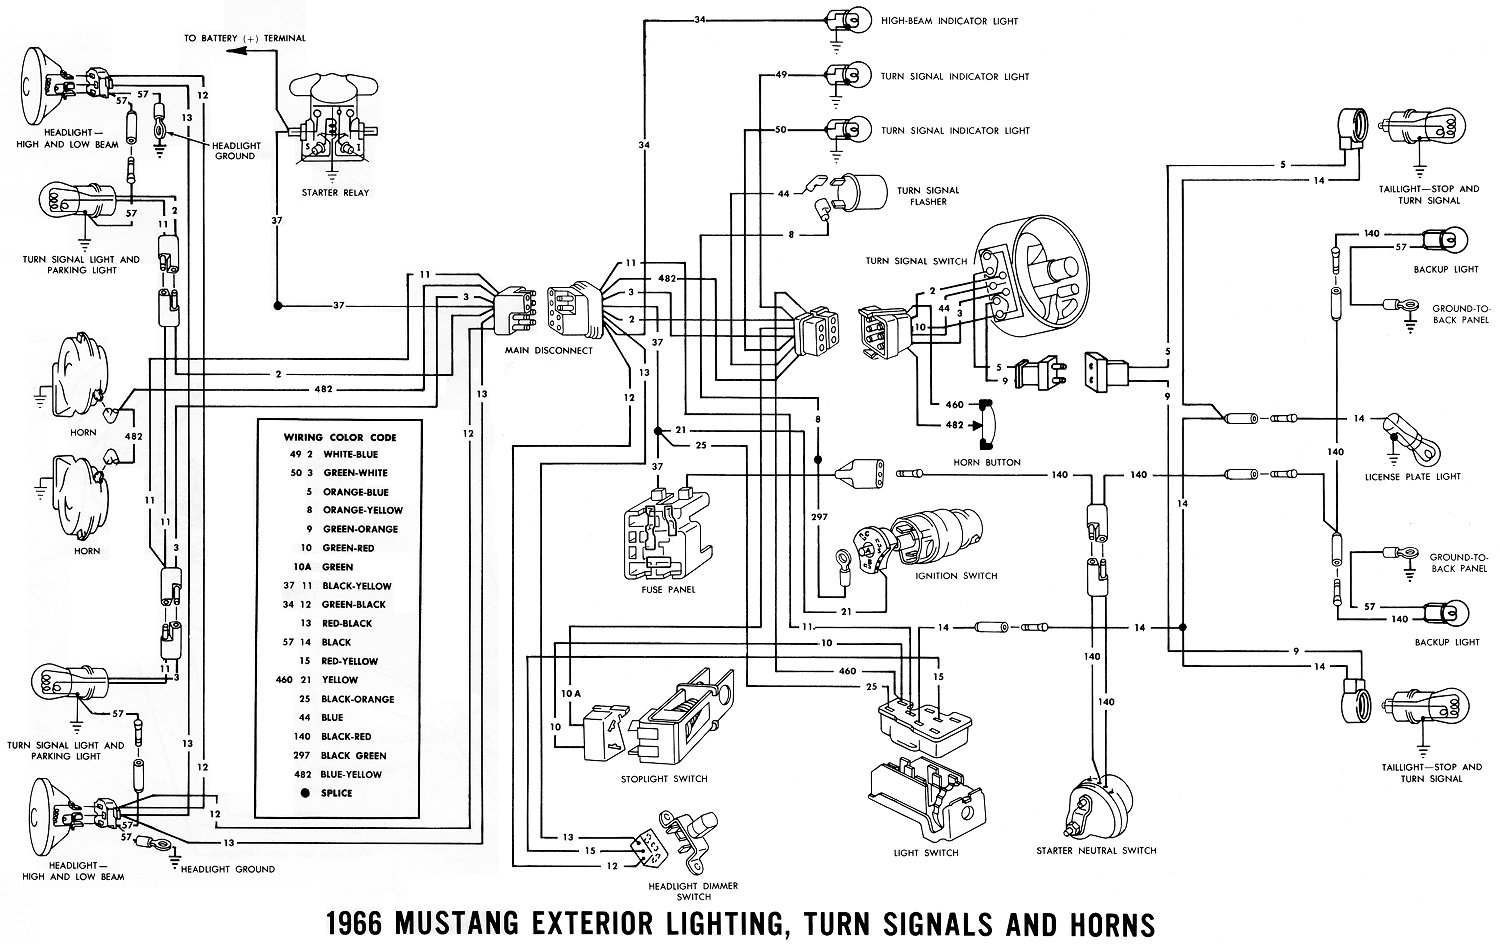 1966 Mustang Wiring Diagrams - Average Joe Restoration